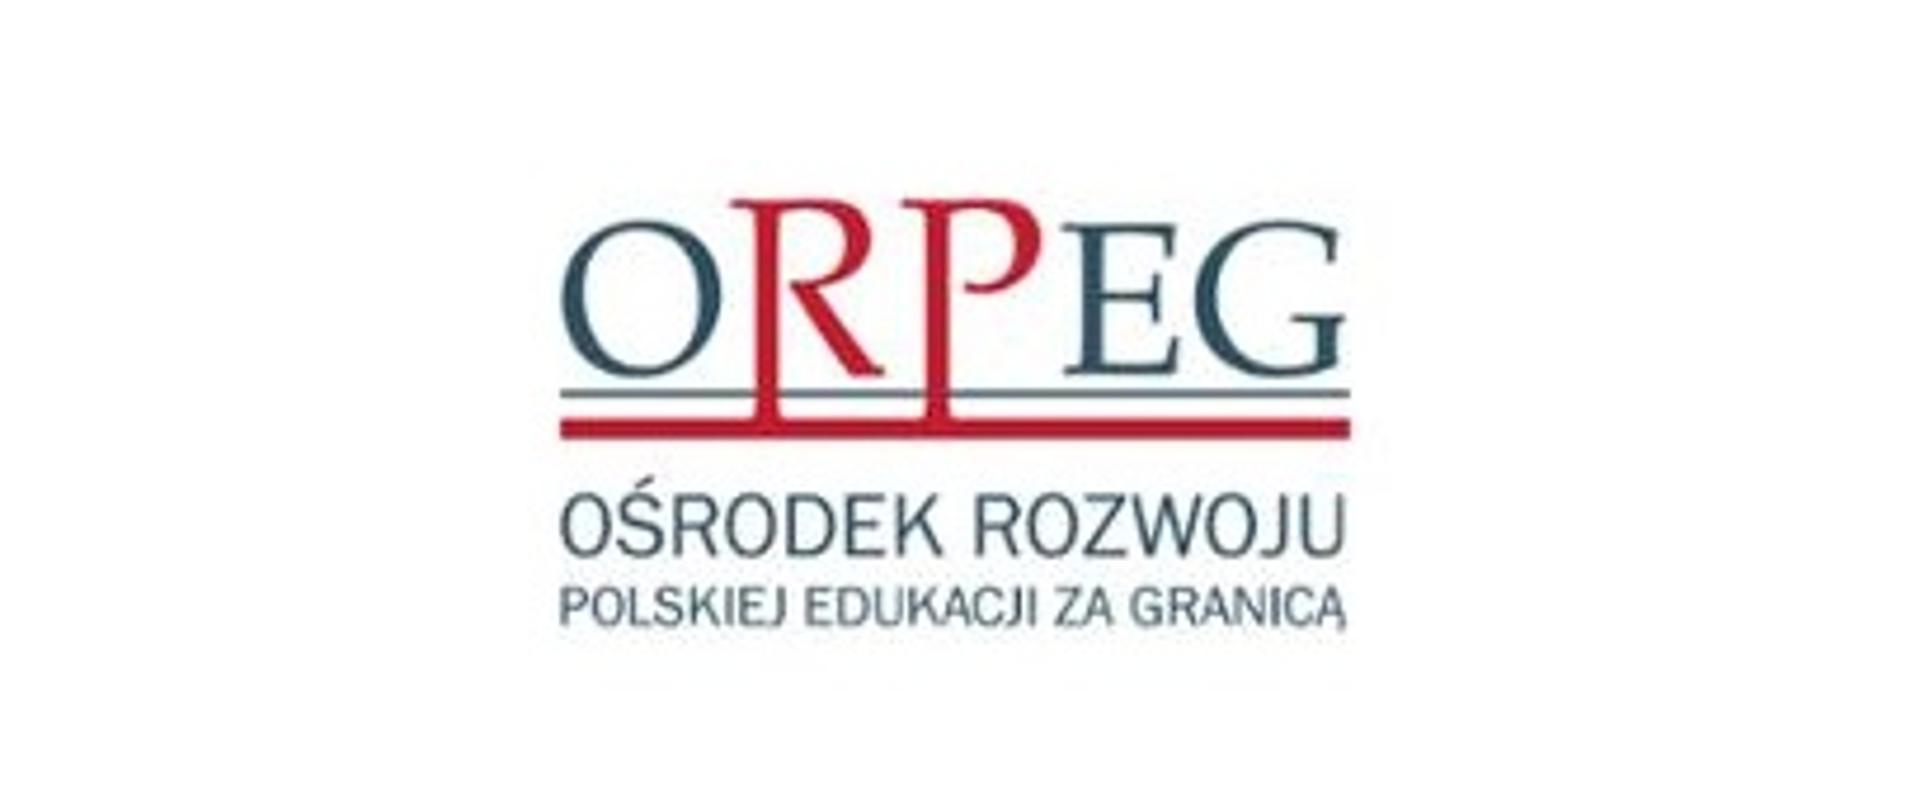 ORPEG_logo